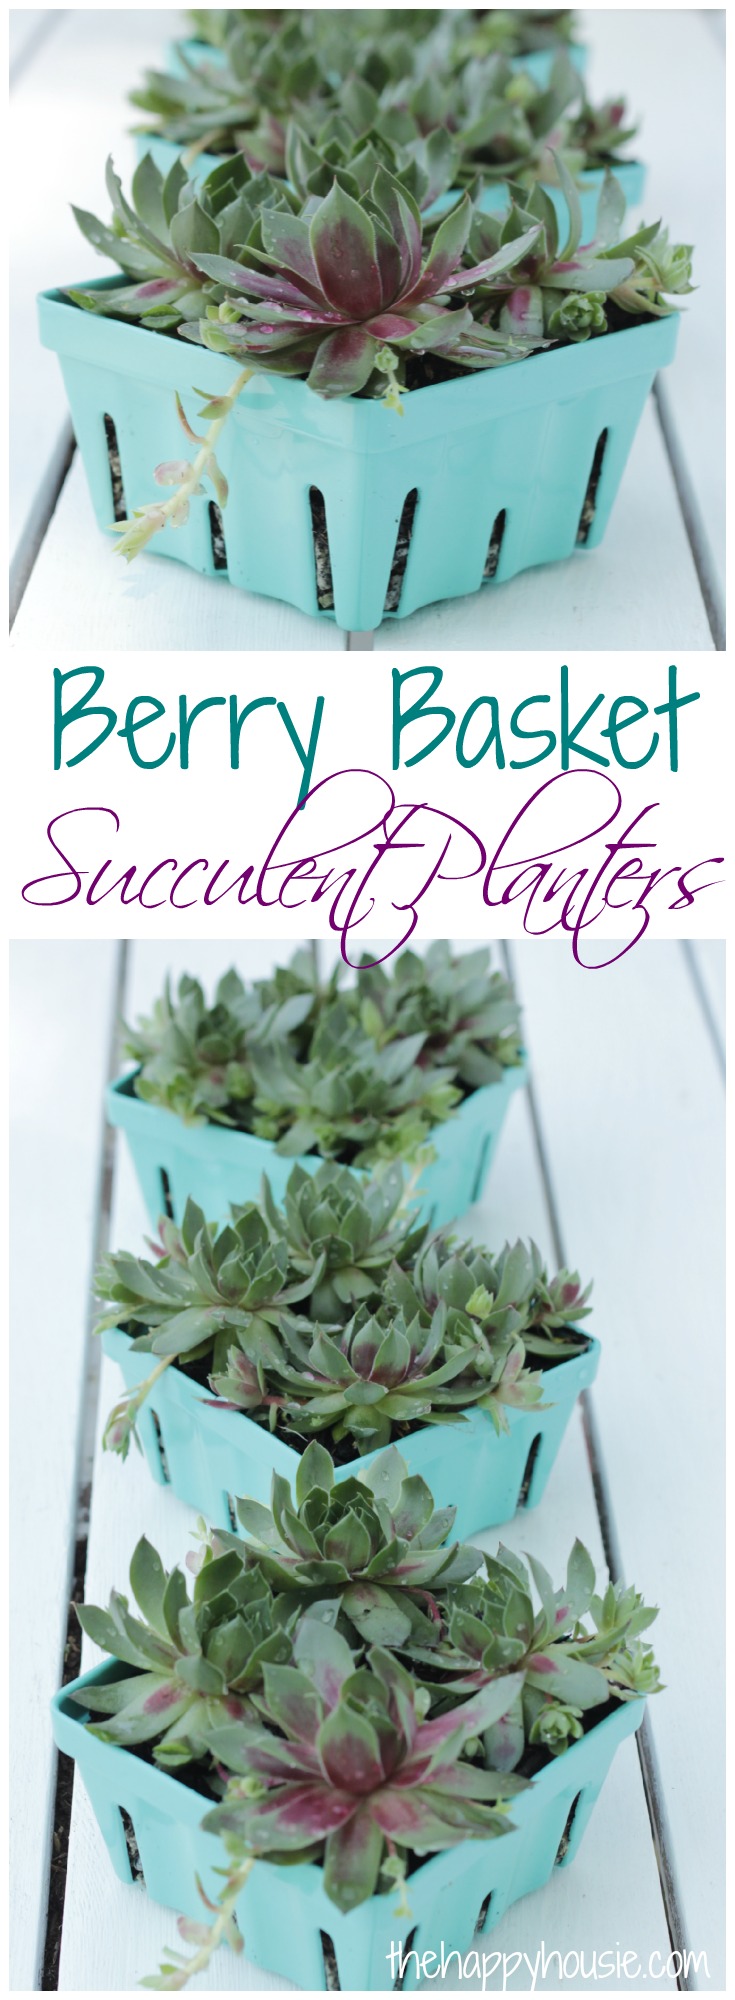 Berry Basket Succulent Planters at thehappyhousie.com